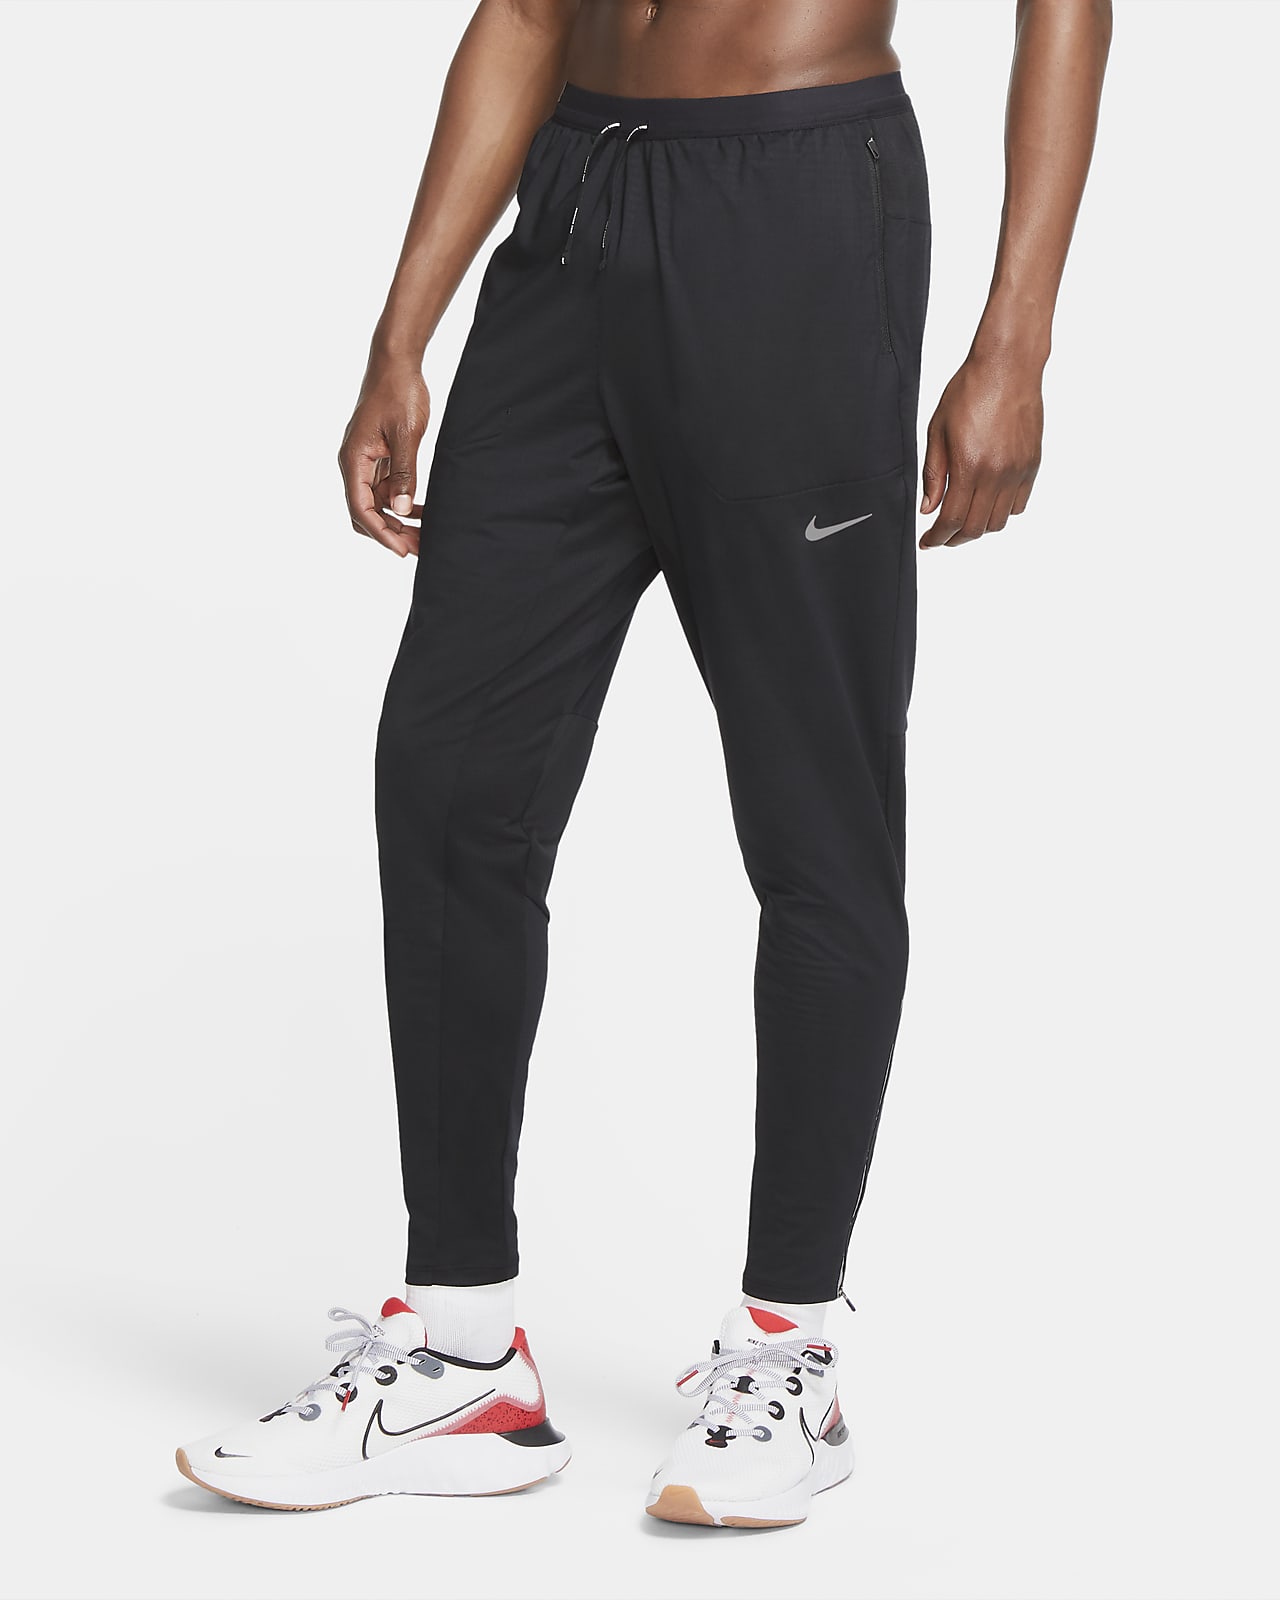 Nike Phenom Elite Pantalon De Running De Tejido Knit Hombre Nike Es